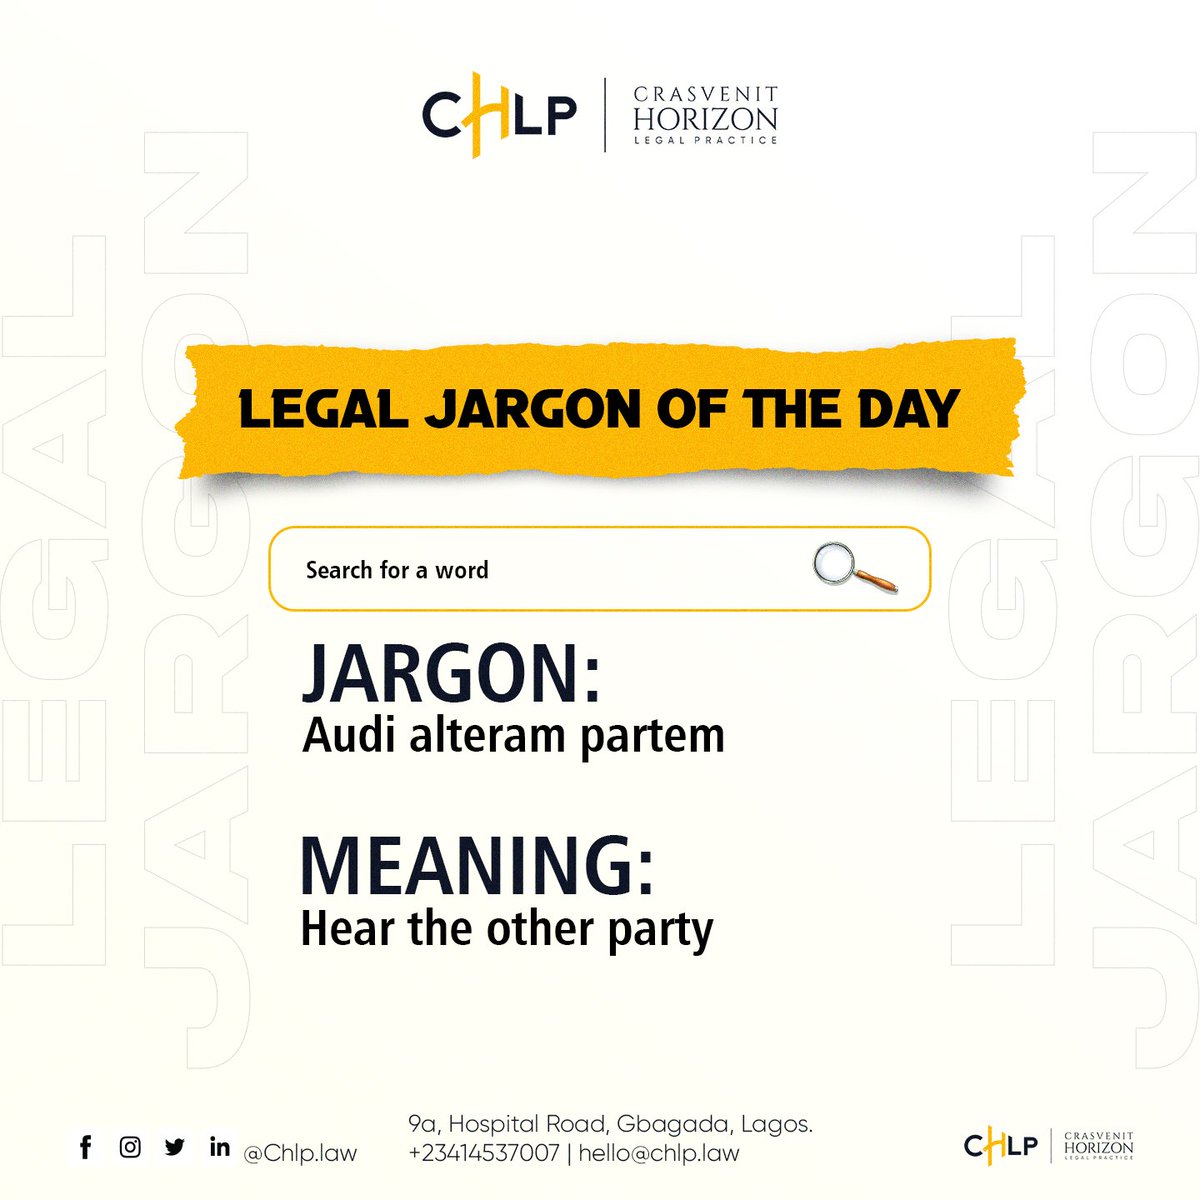 #legaljargon #chlplaw